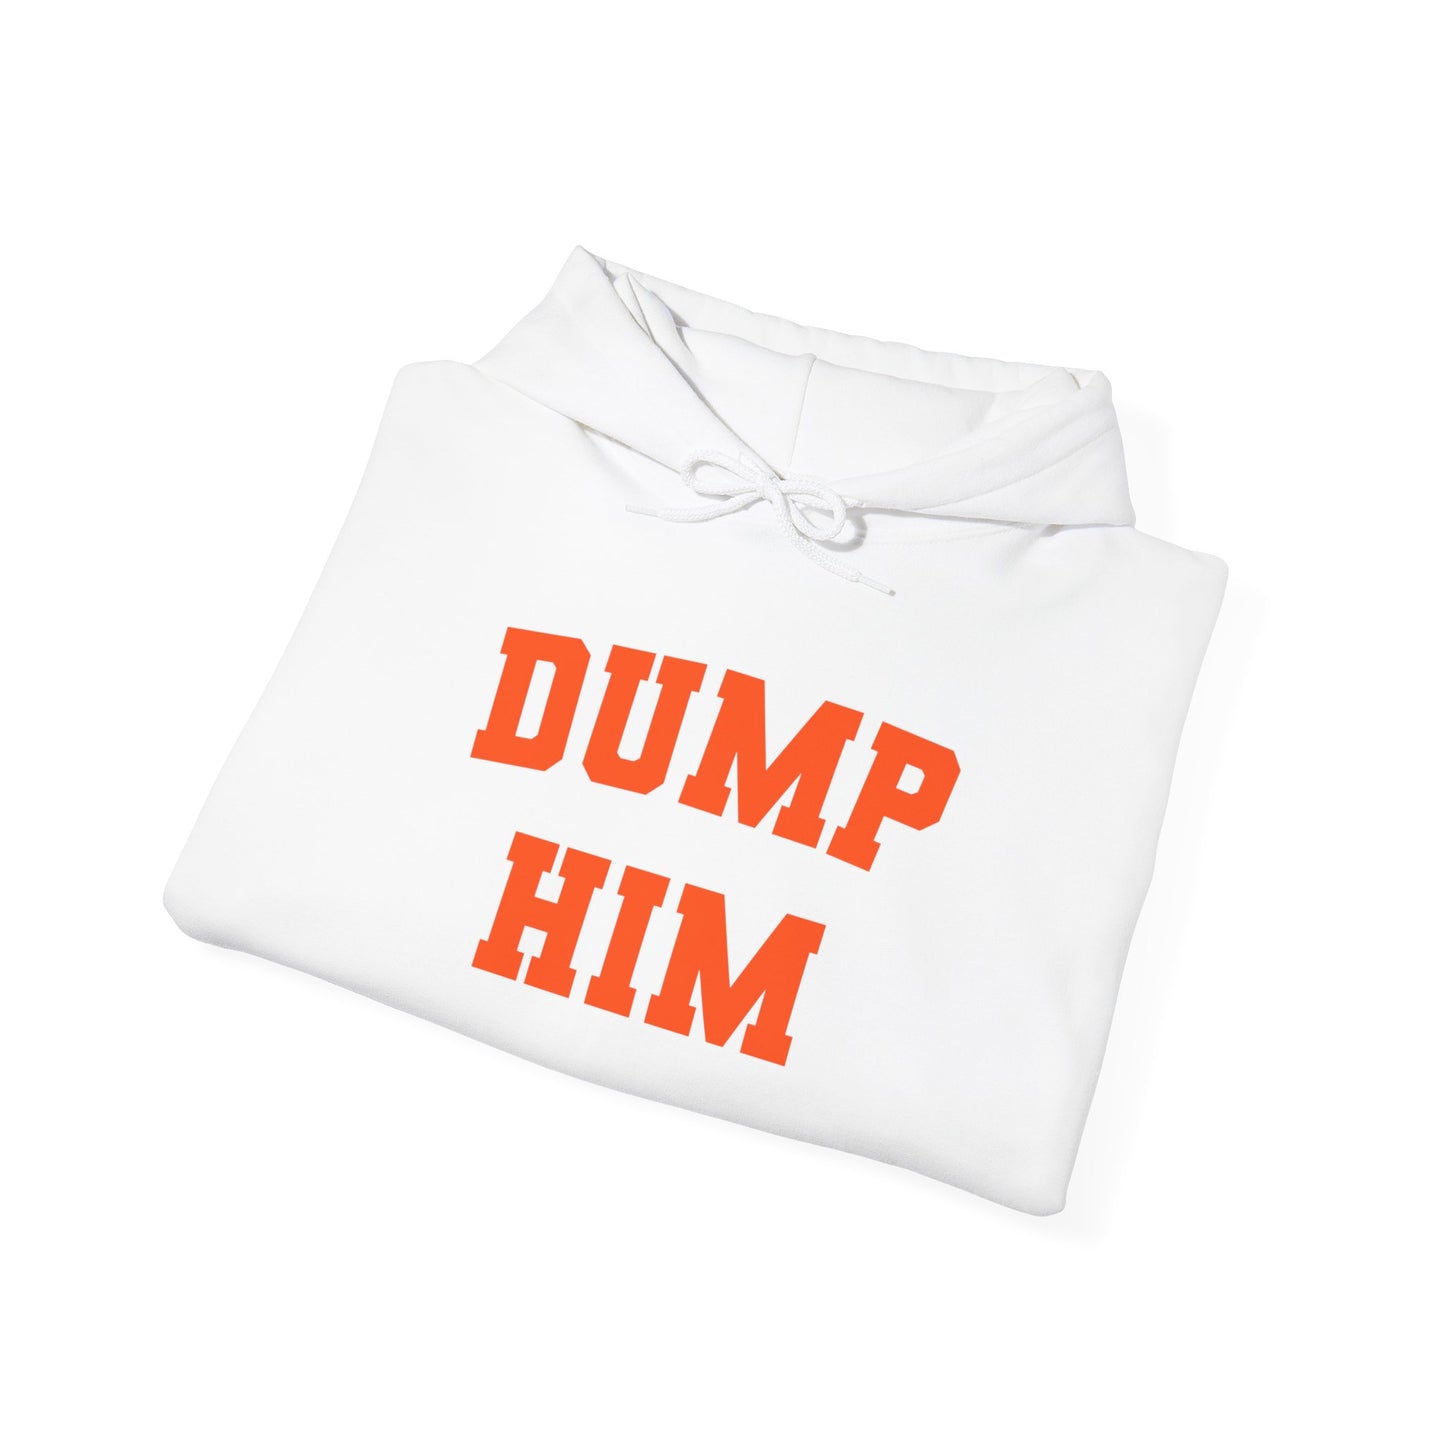 Dump Him - Unisex Hooded Sweatshirt